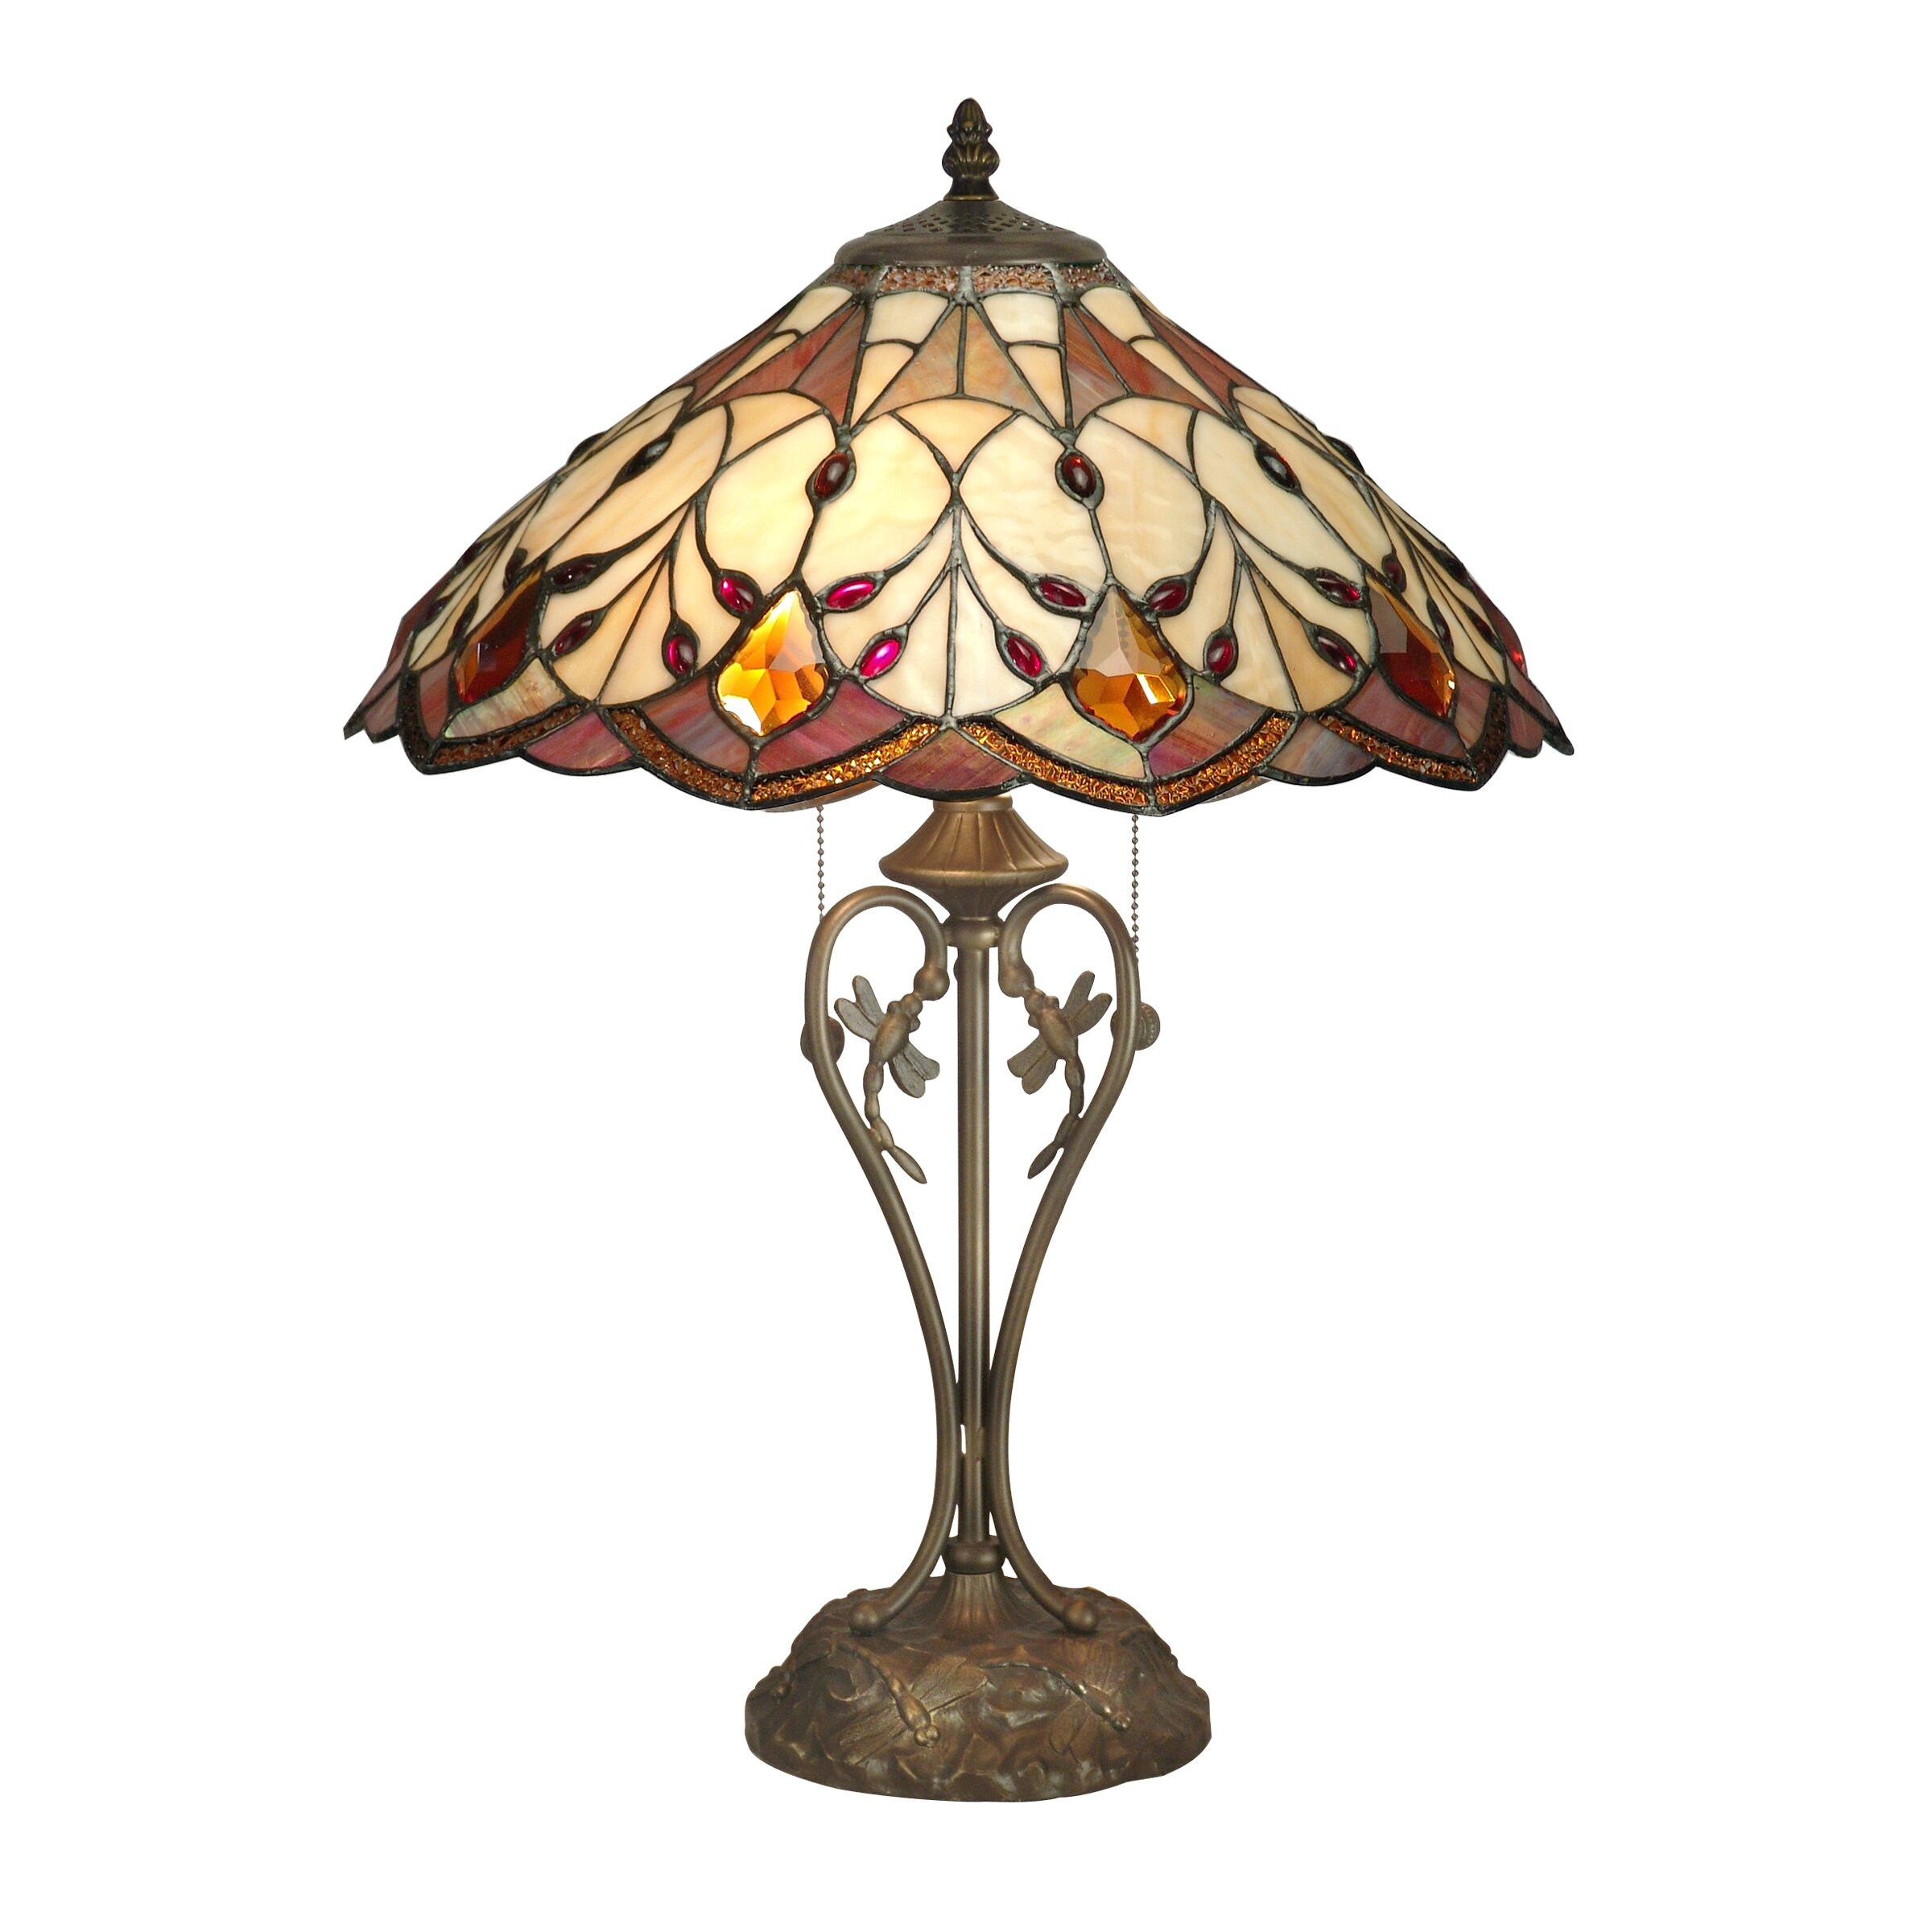 Tuscany table lamp 34